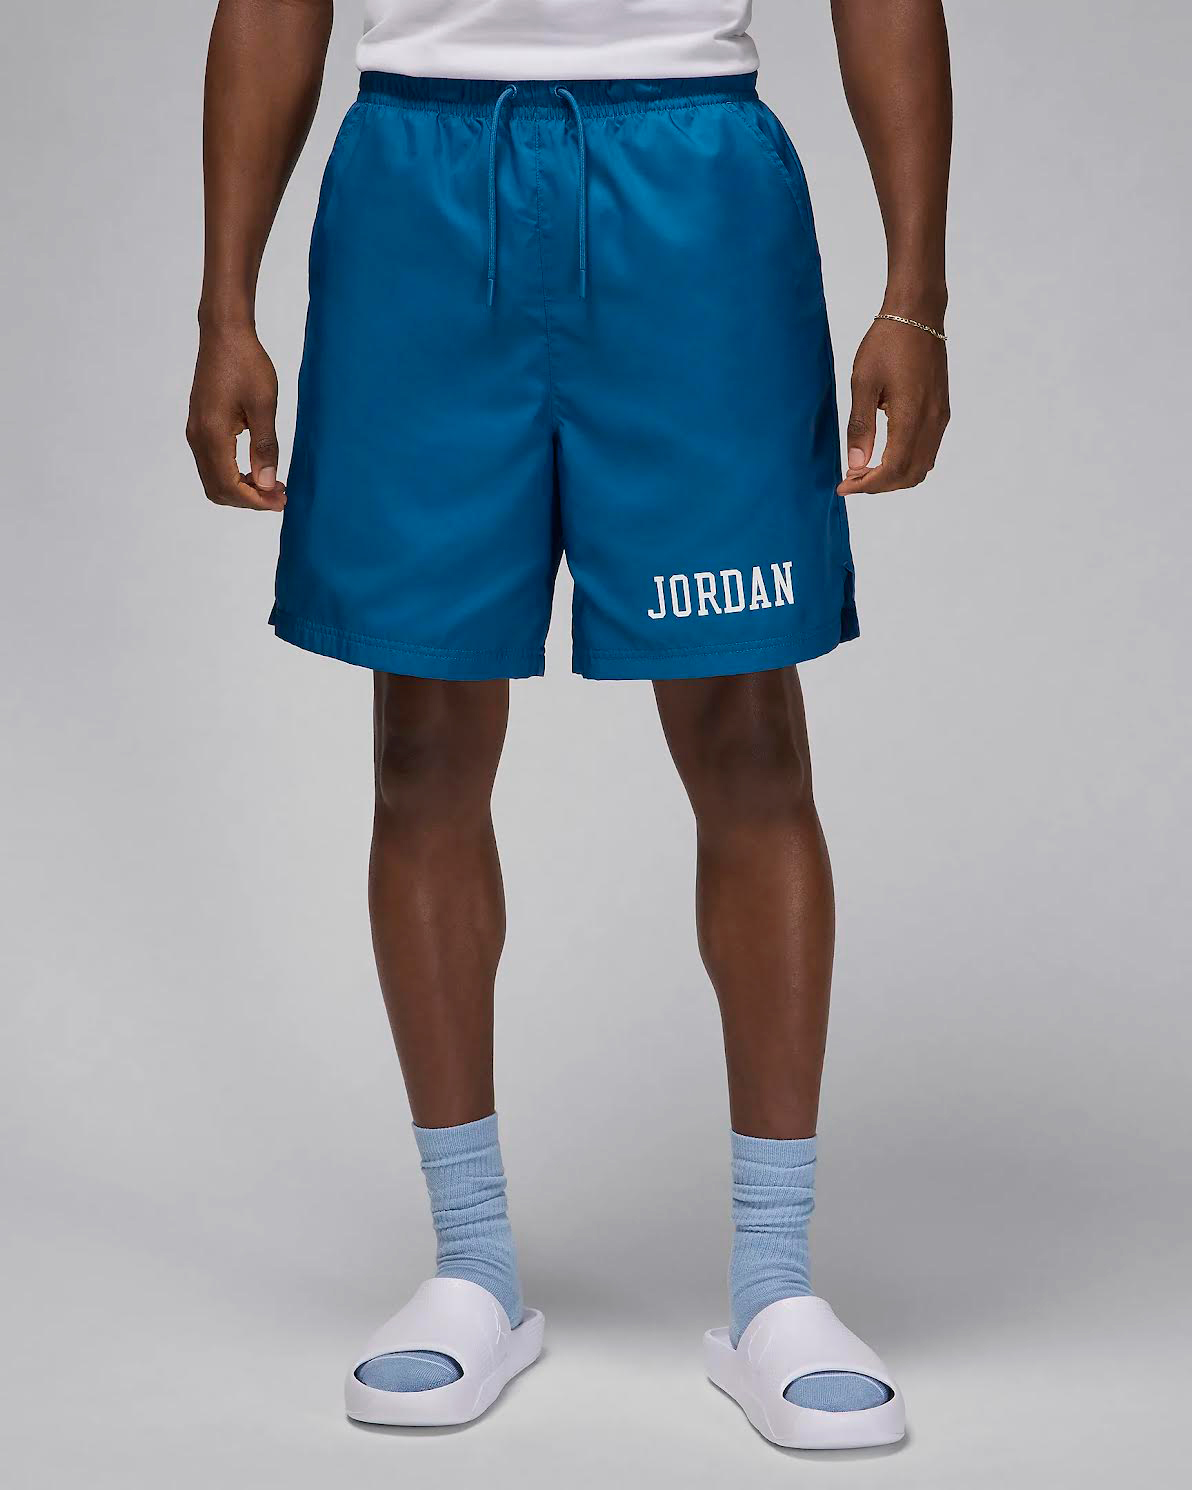 Jordan-Essentials-Poolside-Shorts-Industrial-Blue